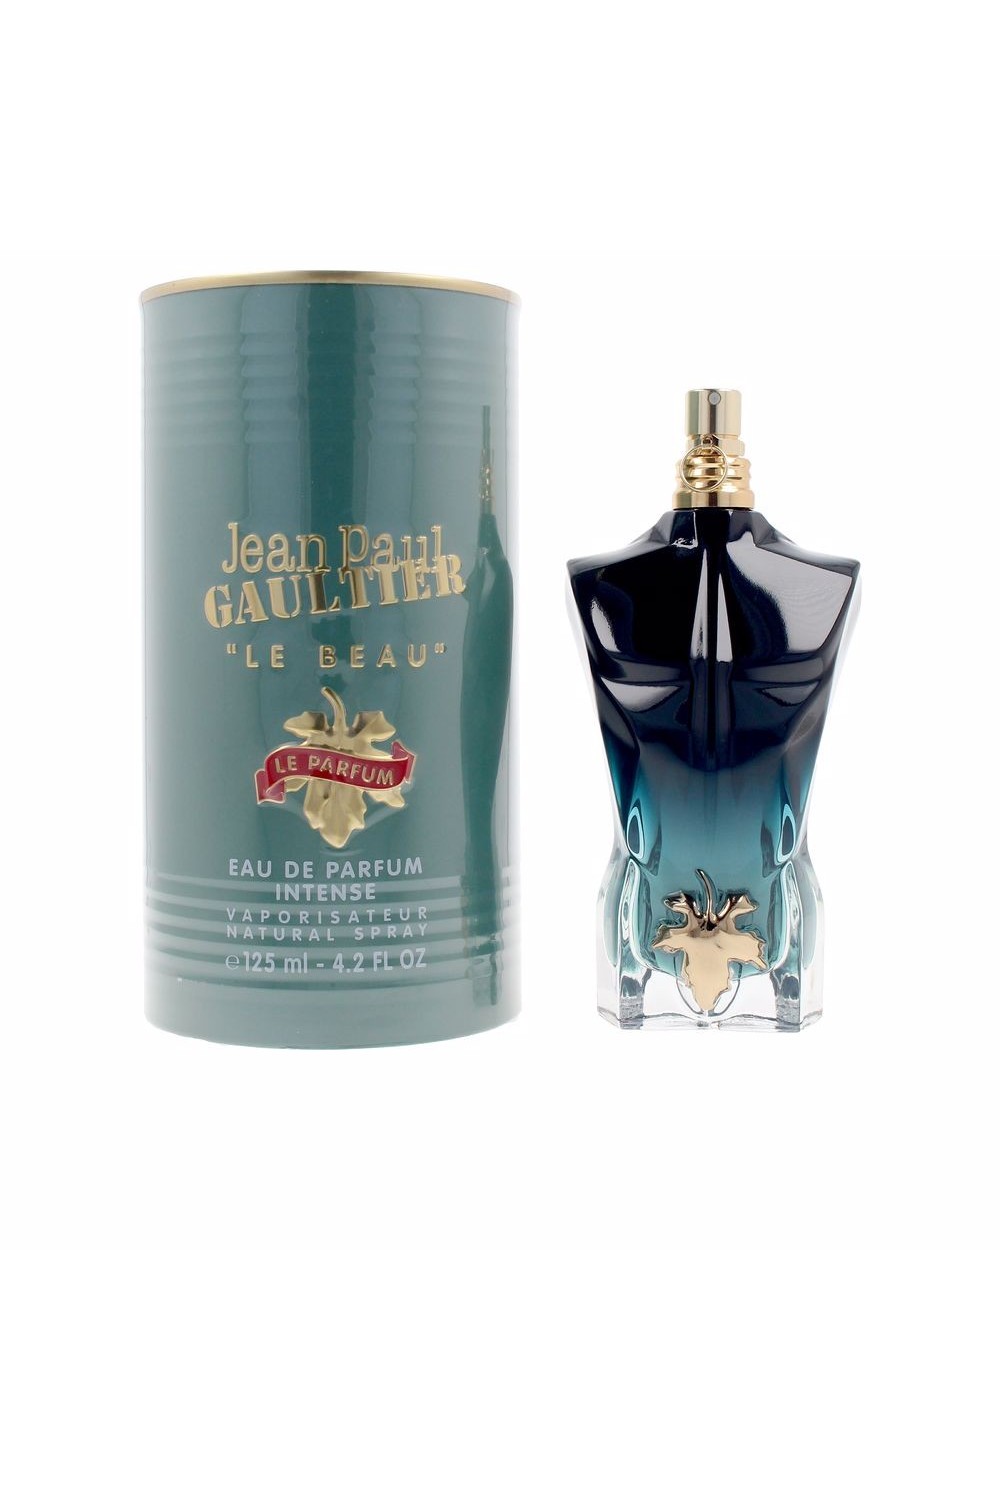 Jean Paul Gaultier Le Beau Le Parfum Eau de Perfume Spray 125ml